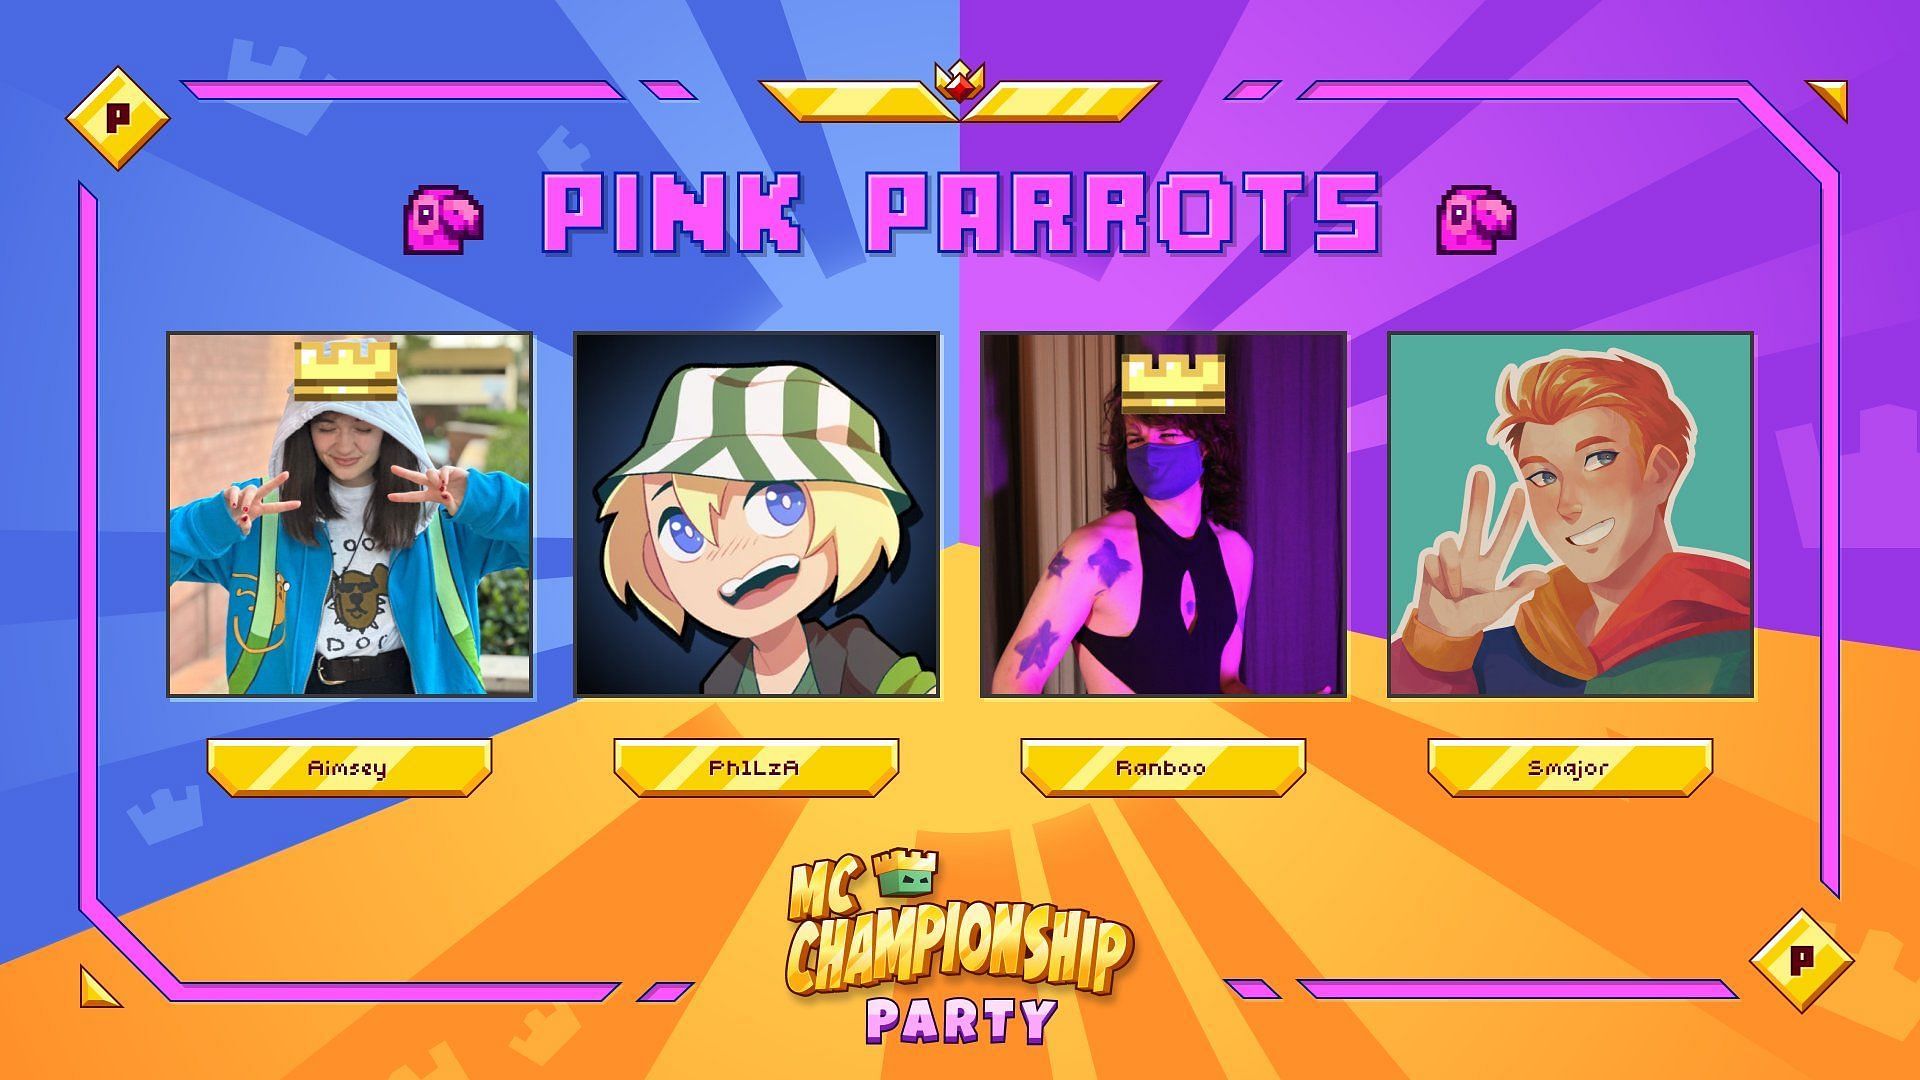 The Pink Parrots for MCC Party (Image via Noxcrew)